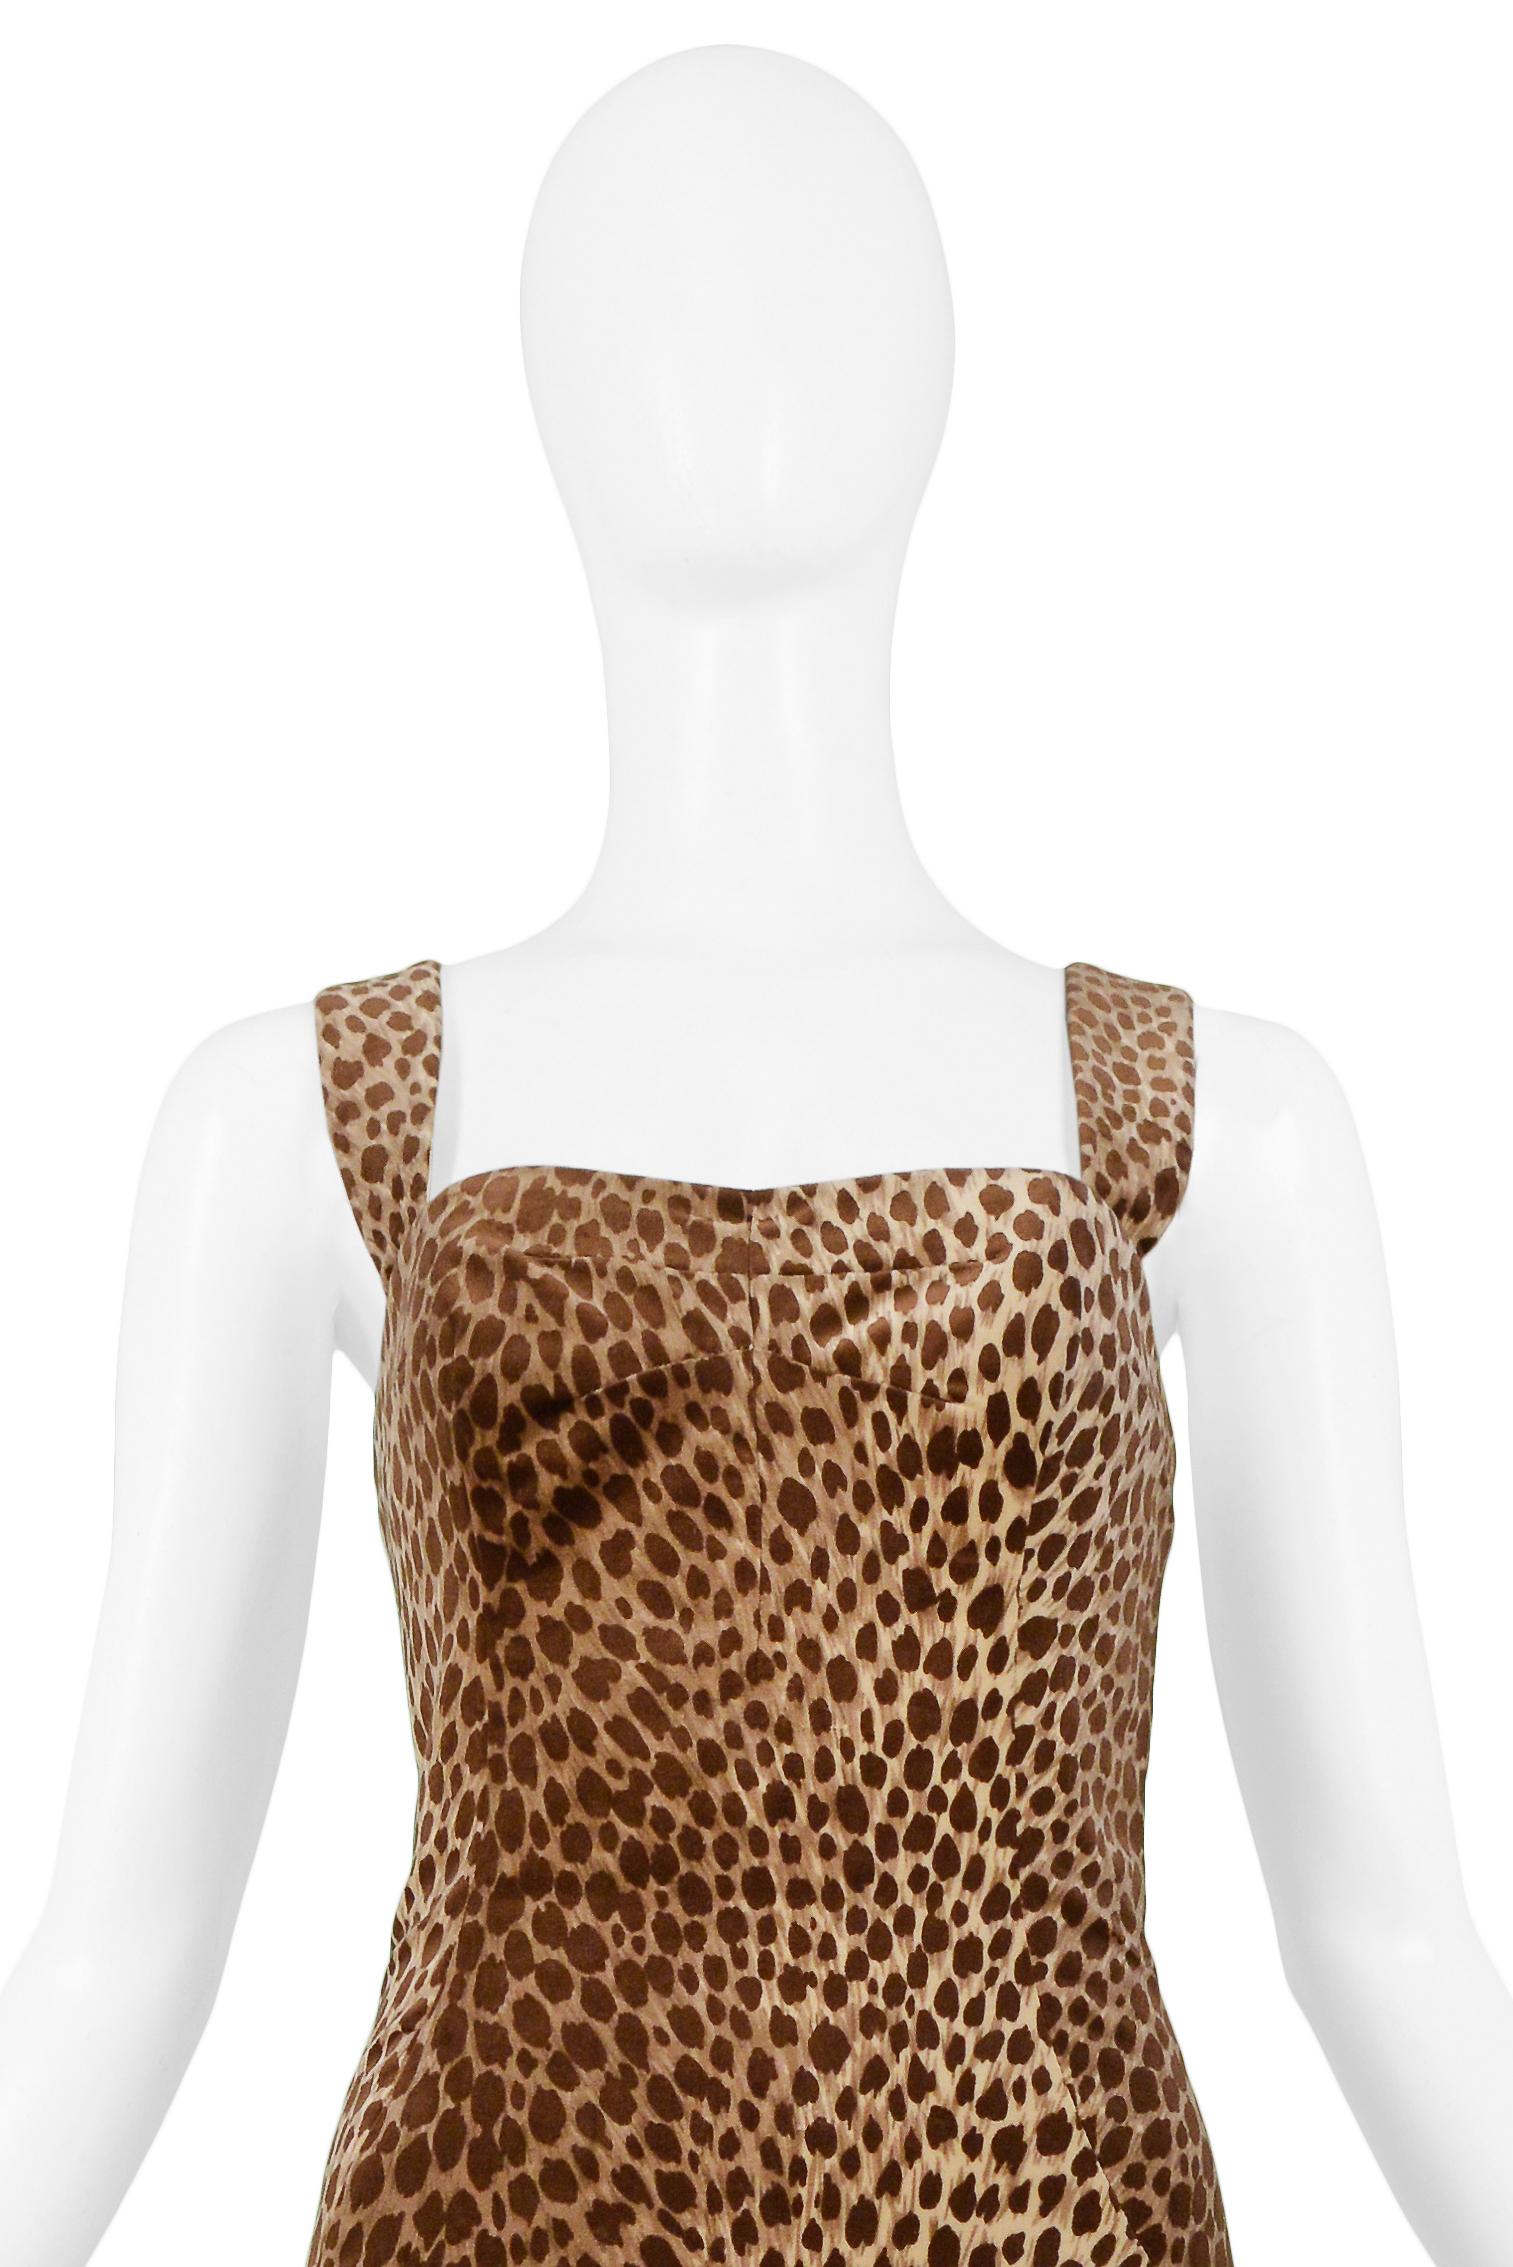 dolce and gabbana leopard dress